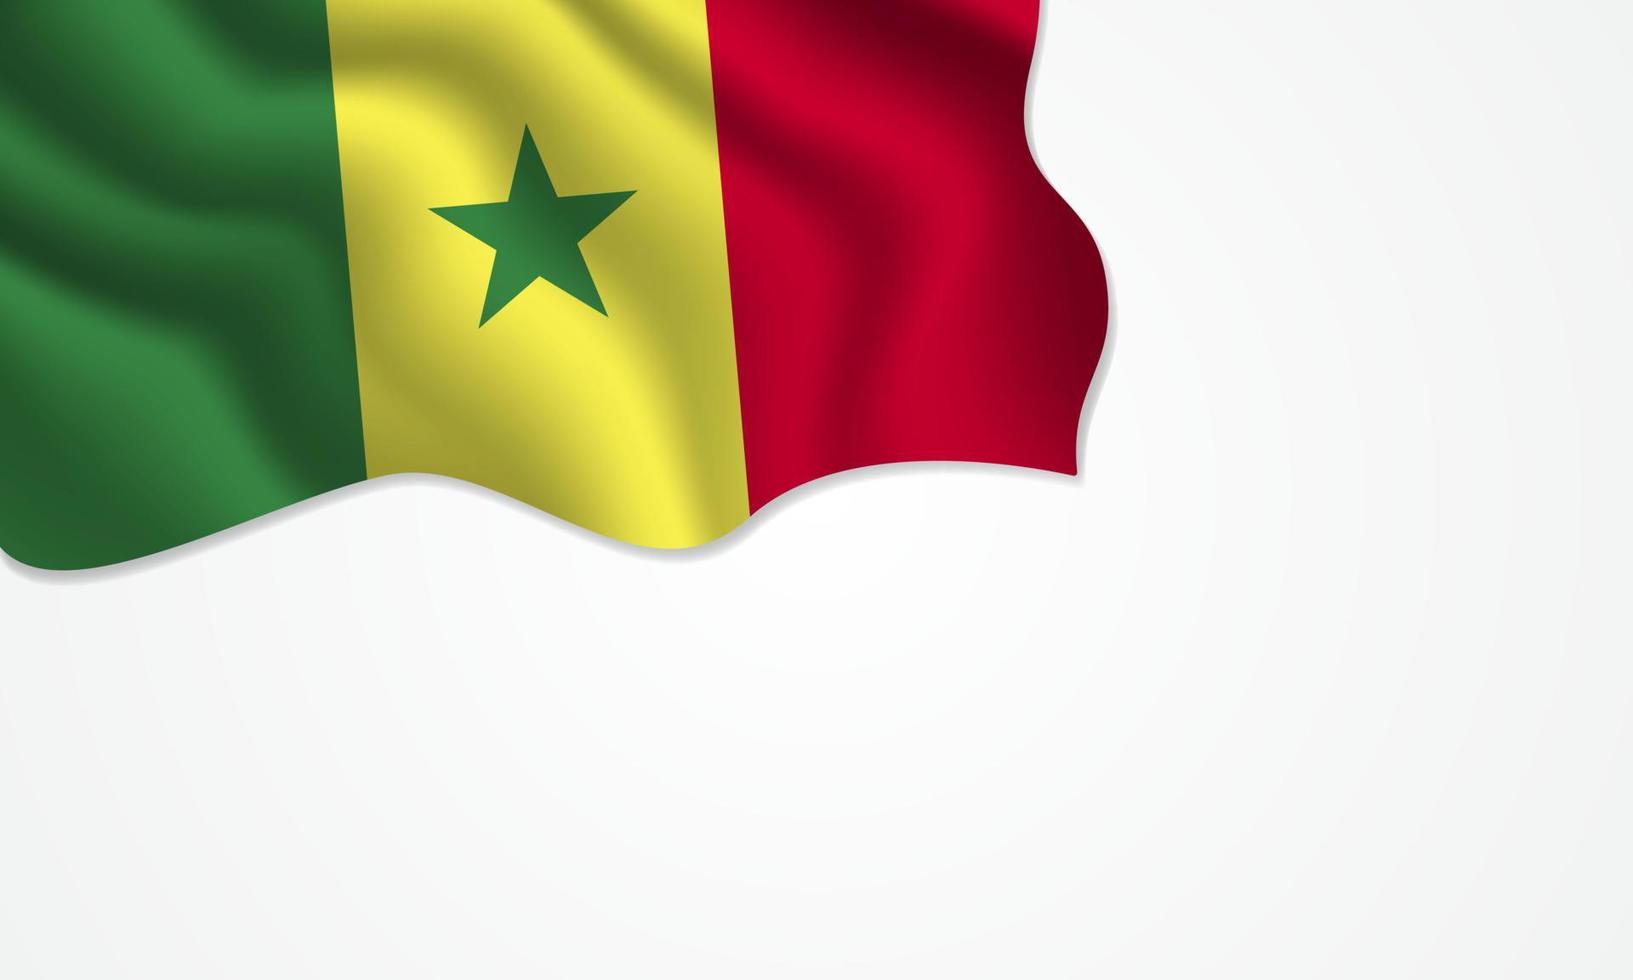 Senegal flag waving illustration on isolated background vector